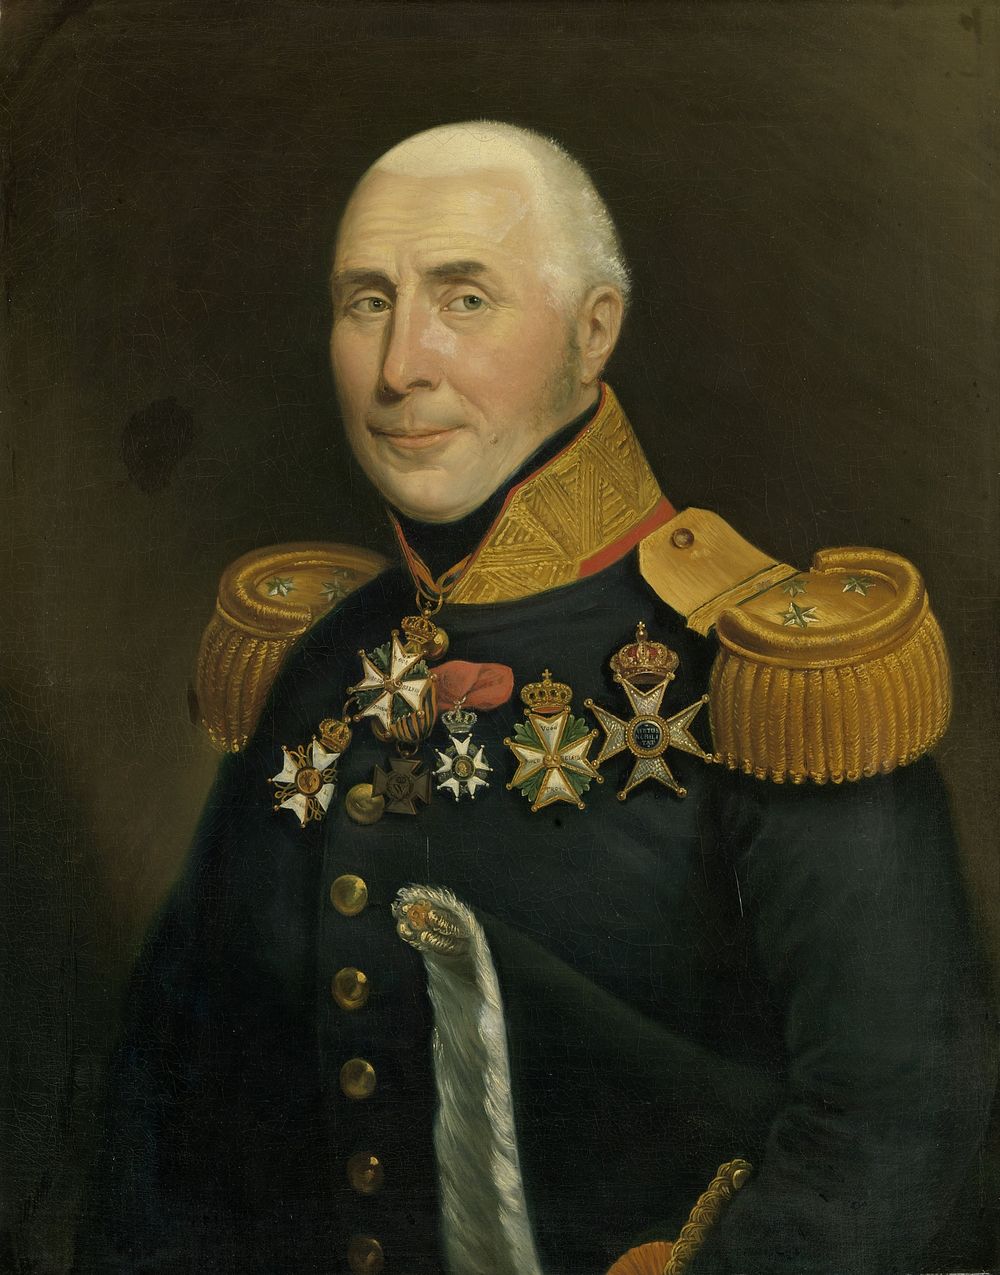 Gijsbertus Martinus Cort Heyligers (1770-1849). Lieutenant General in the Infantery (1831) by Jan Kieft